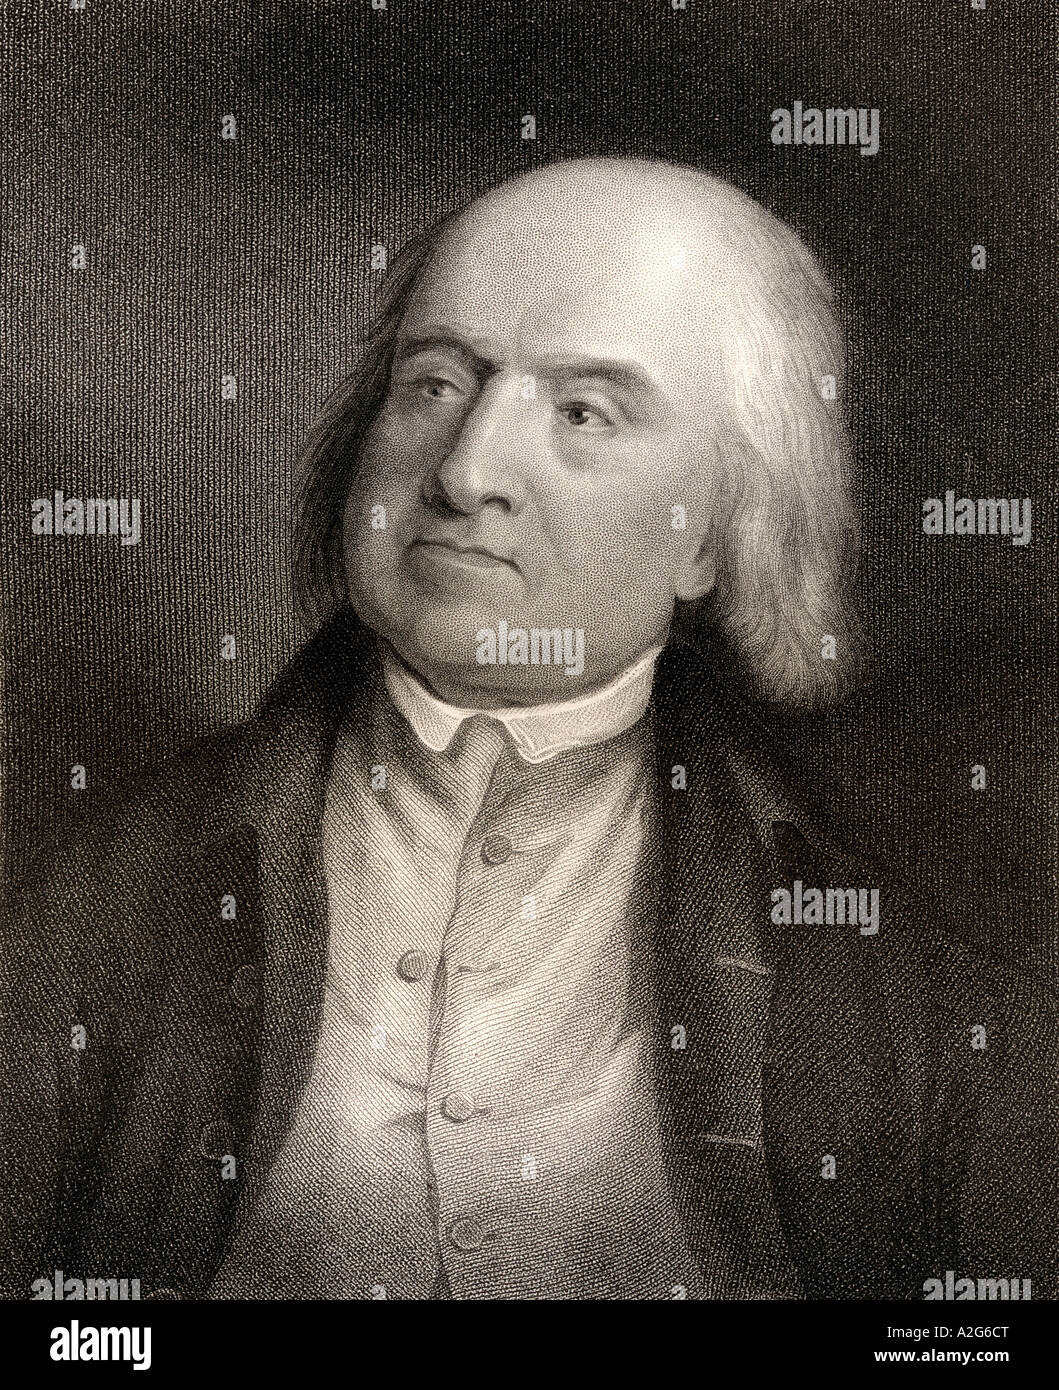 Jeremiy Bentham, 1748-1832. Filósofo, economista y jurista teórico inglés. Foto de stock